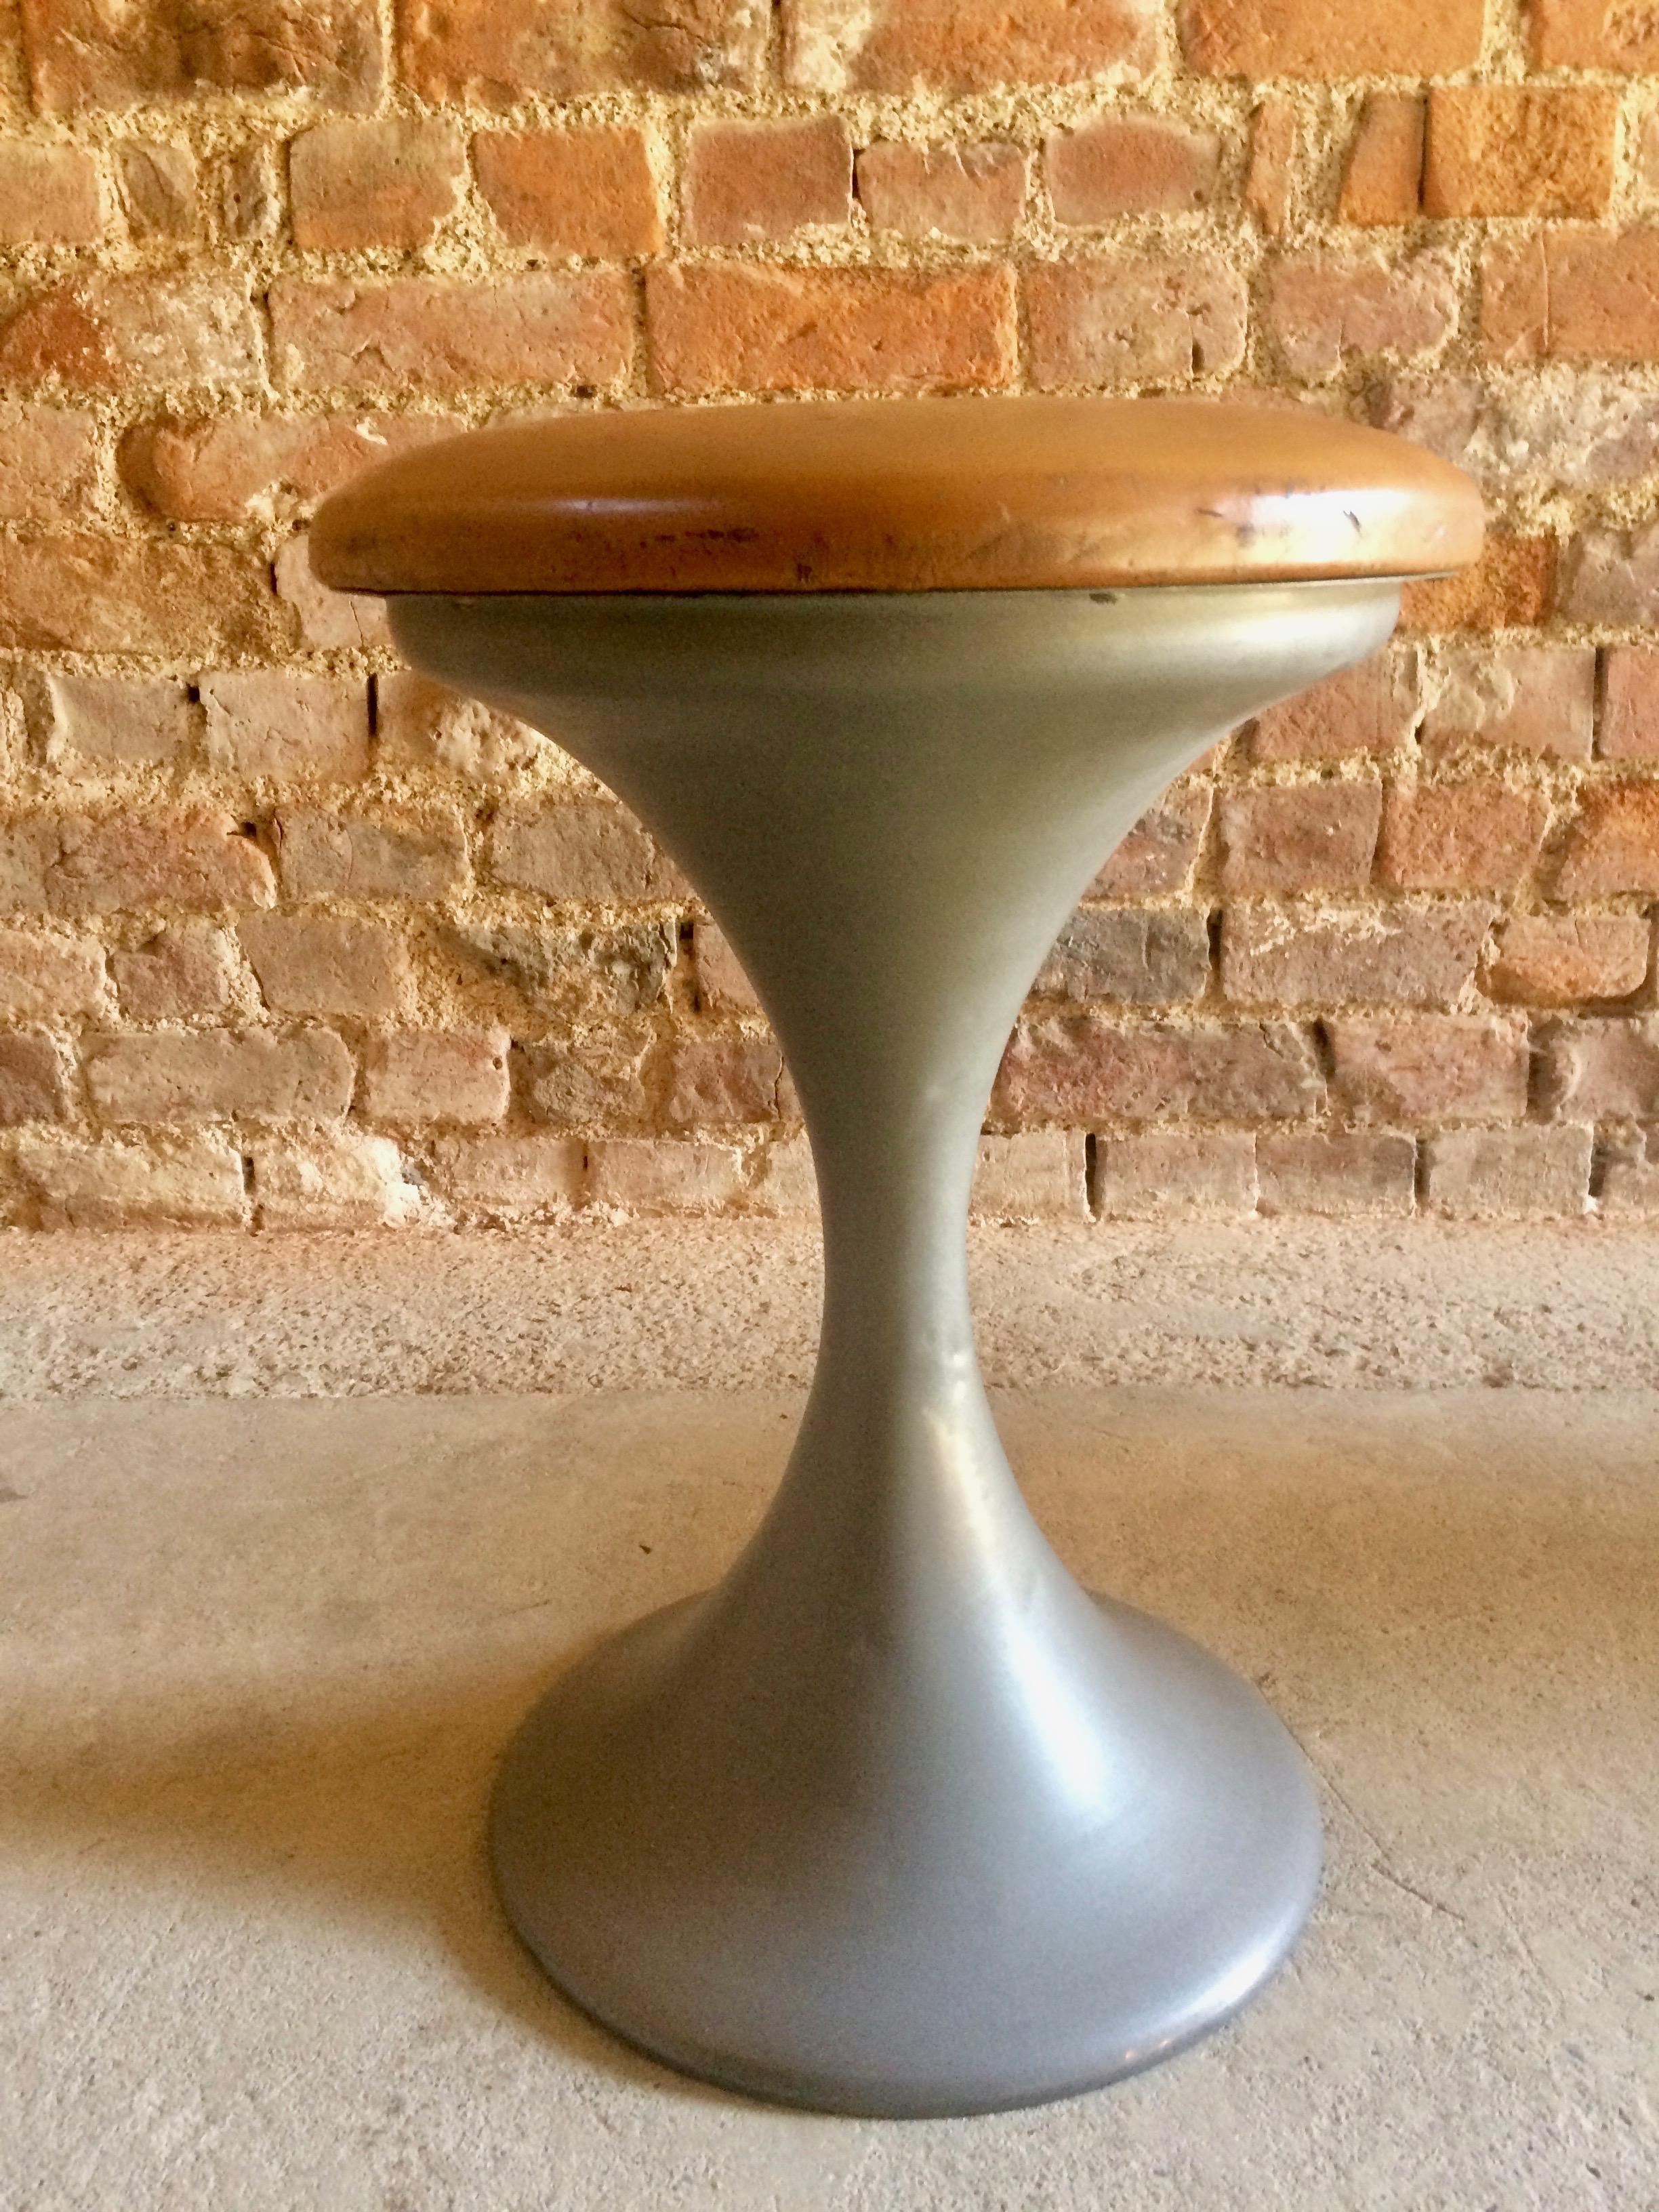 Aluminum Midcentury Tulip Table and Stools 1960s Coffee Table Tulip Chairs Vintage Danish